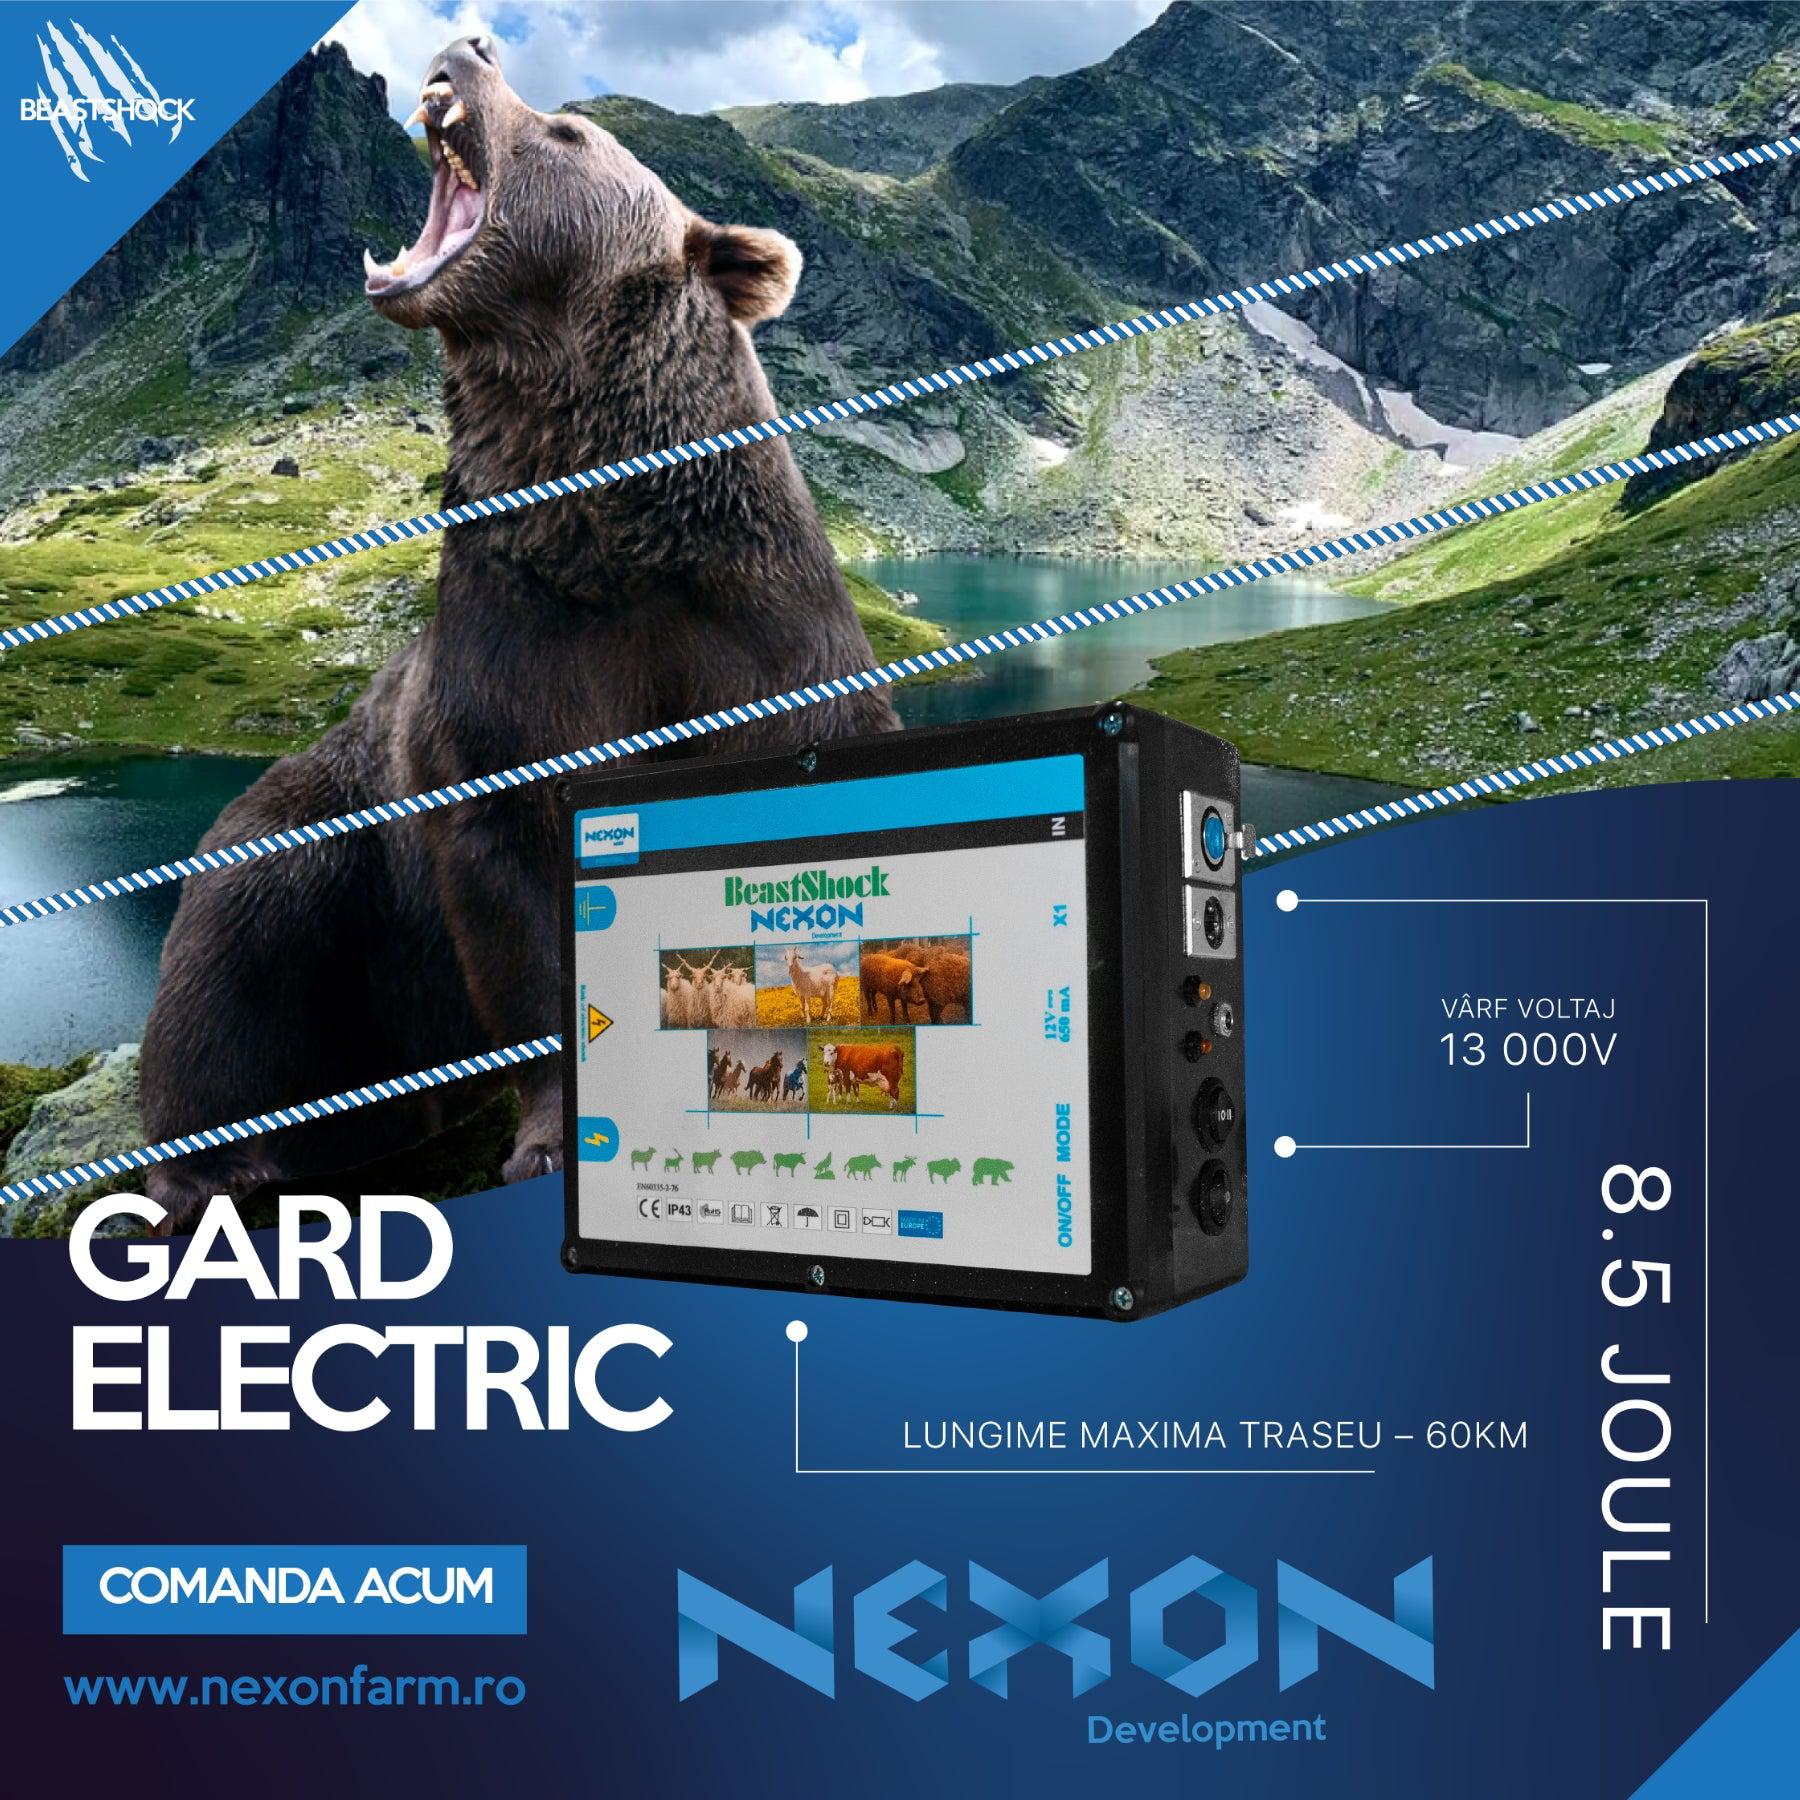 Gard electric BeastShock Industrial 8.5J NEXON-NEXON FARM